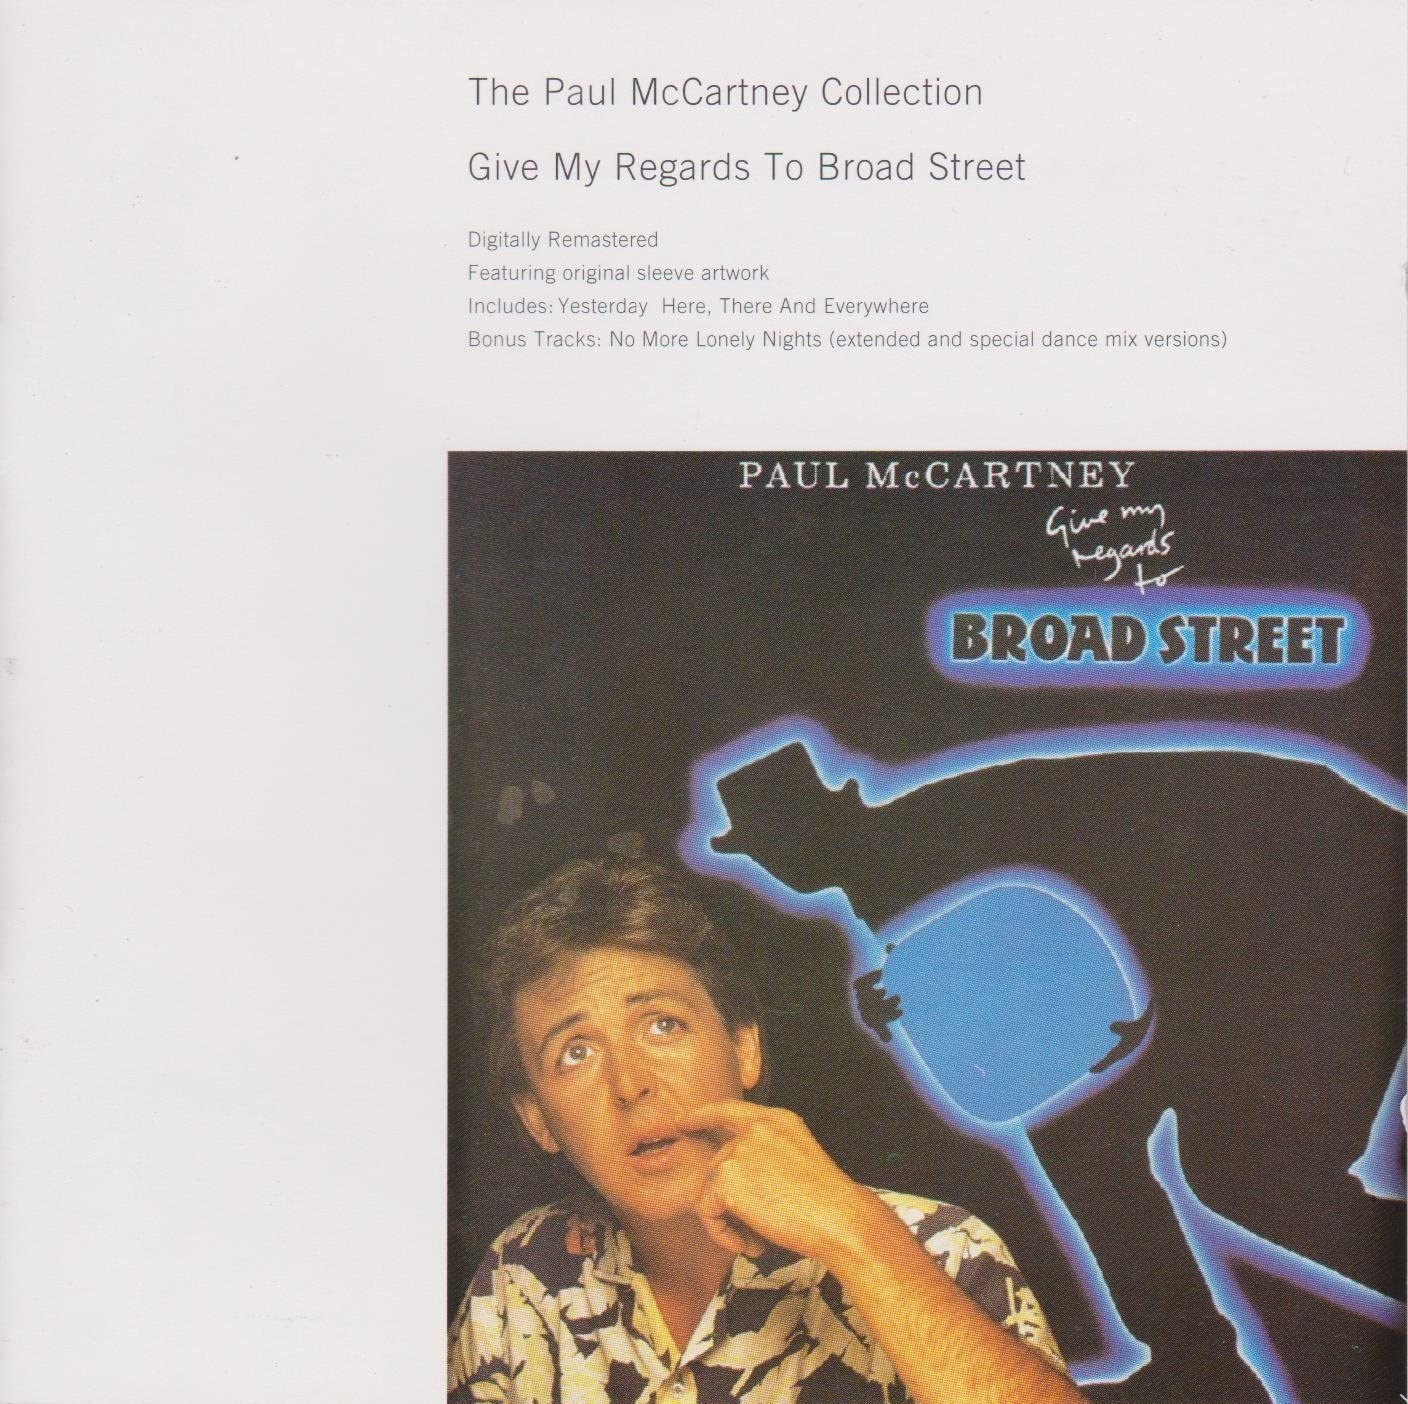 Give My Regards To Broadstreet by Paul McCartney